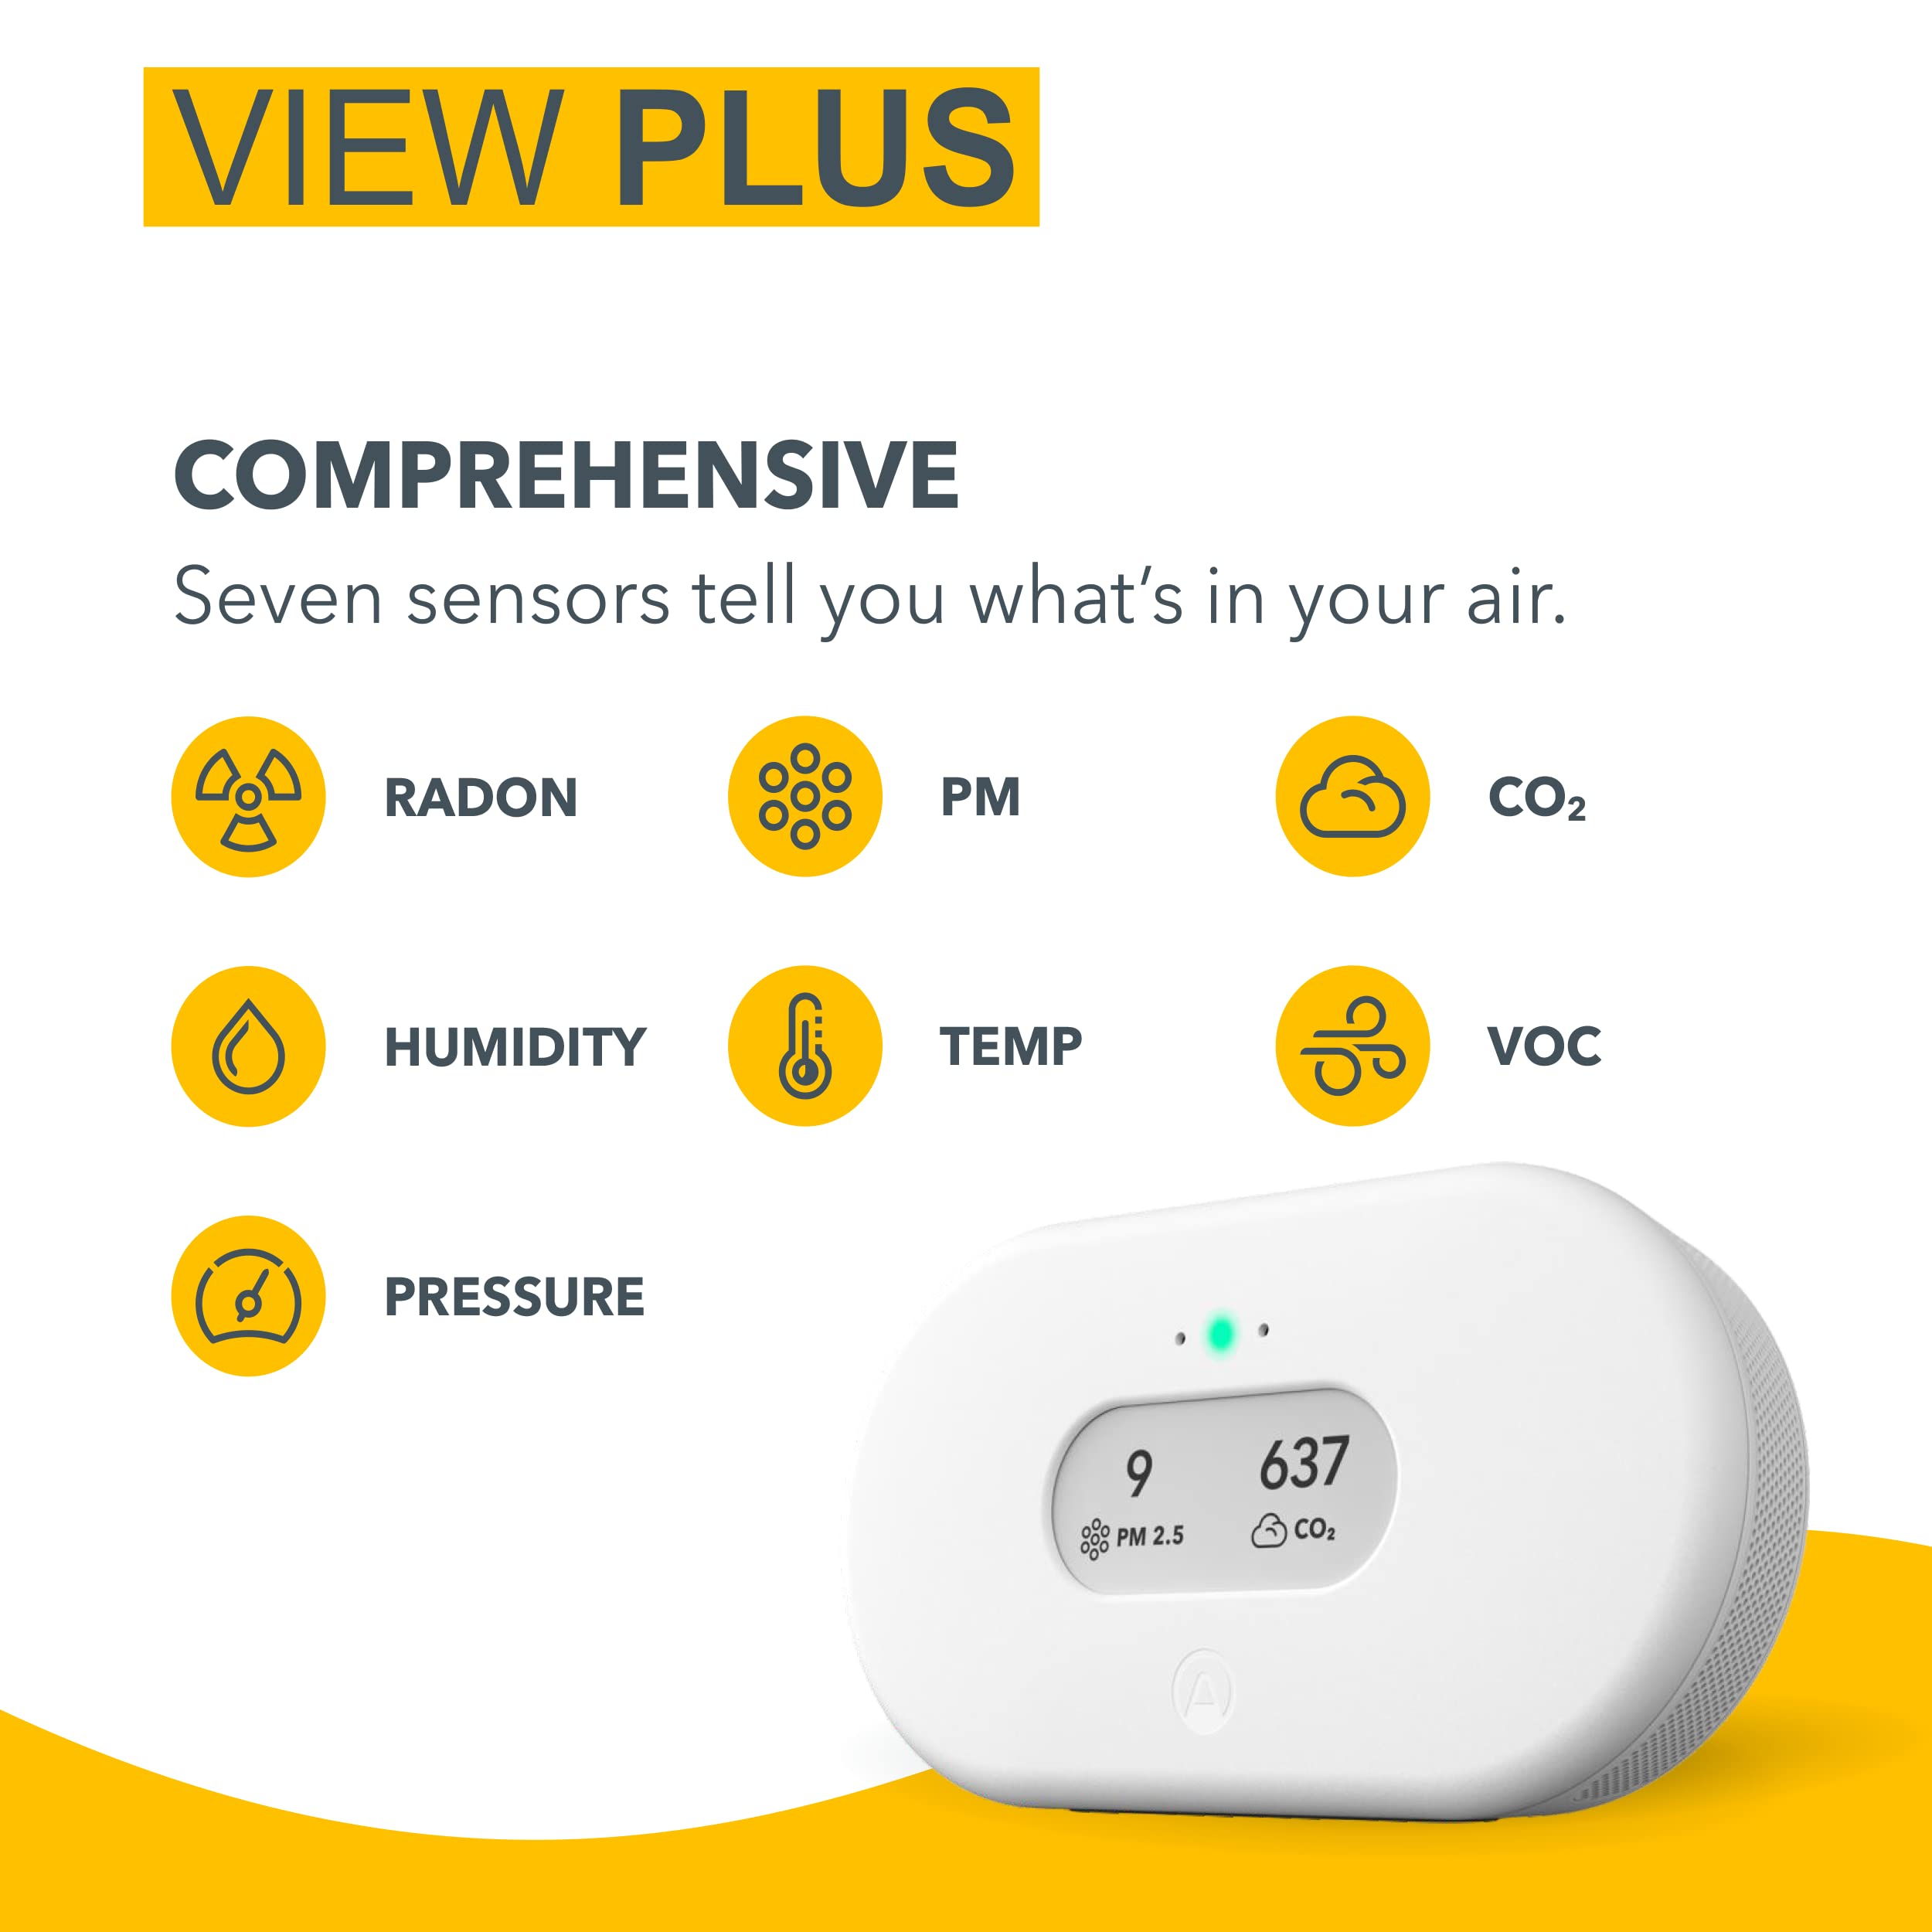 Airthings 2960 View Plus - Battery Powered Radon & Air Quality Monitor (PM, CO2, VOC, Humidity, Temp, Pressure)